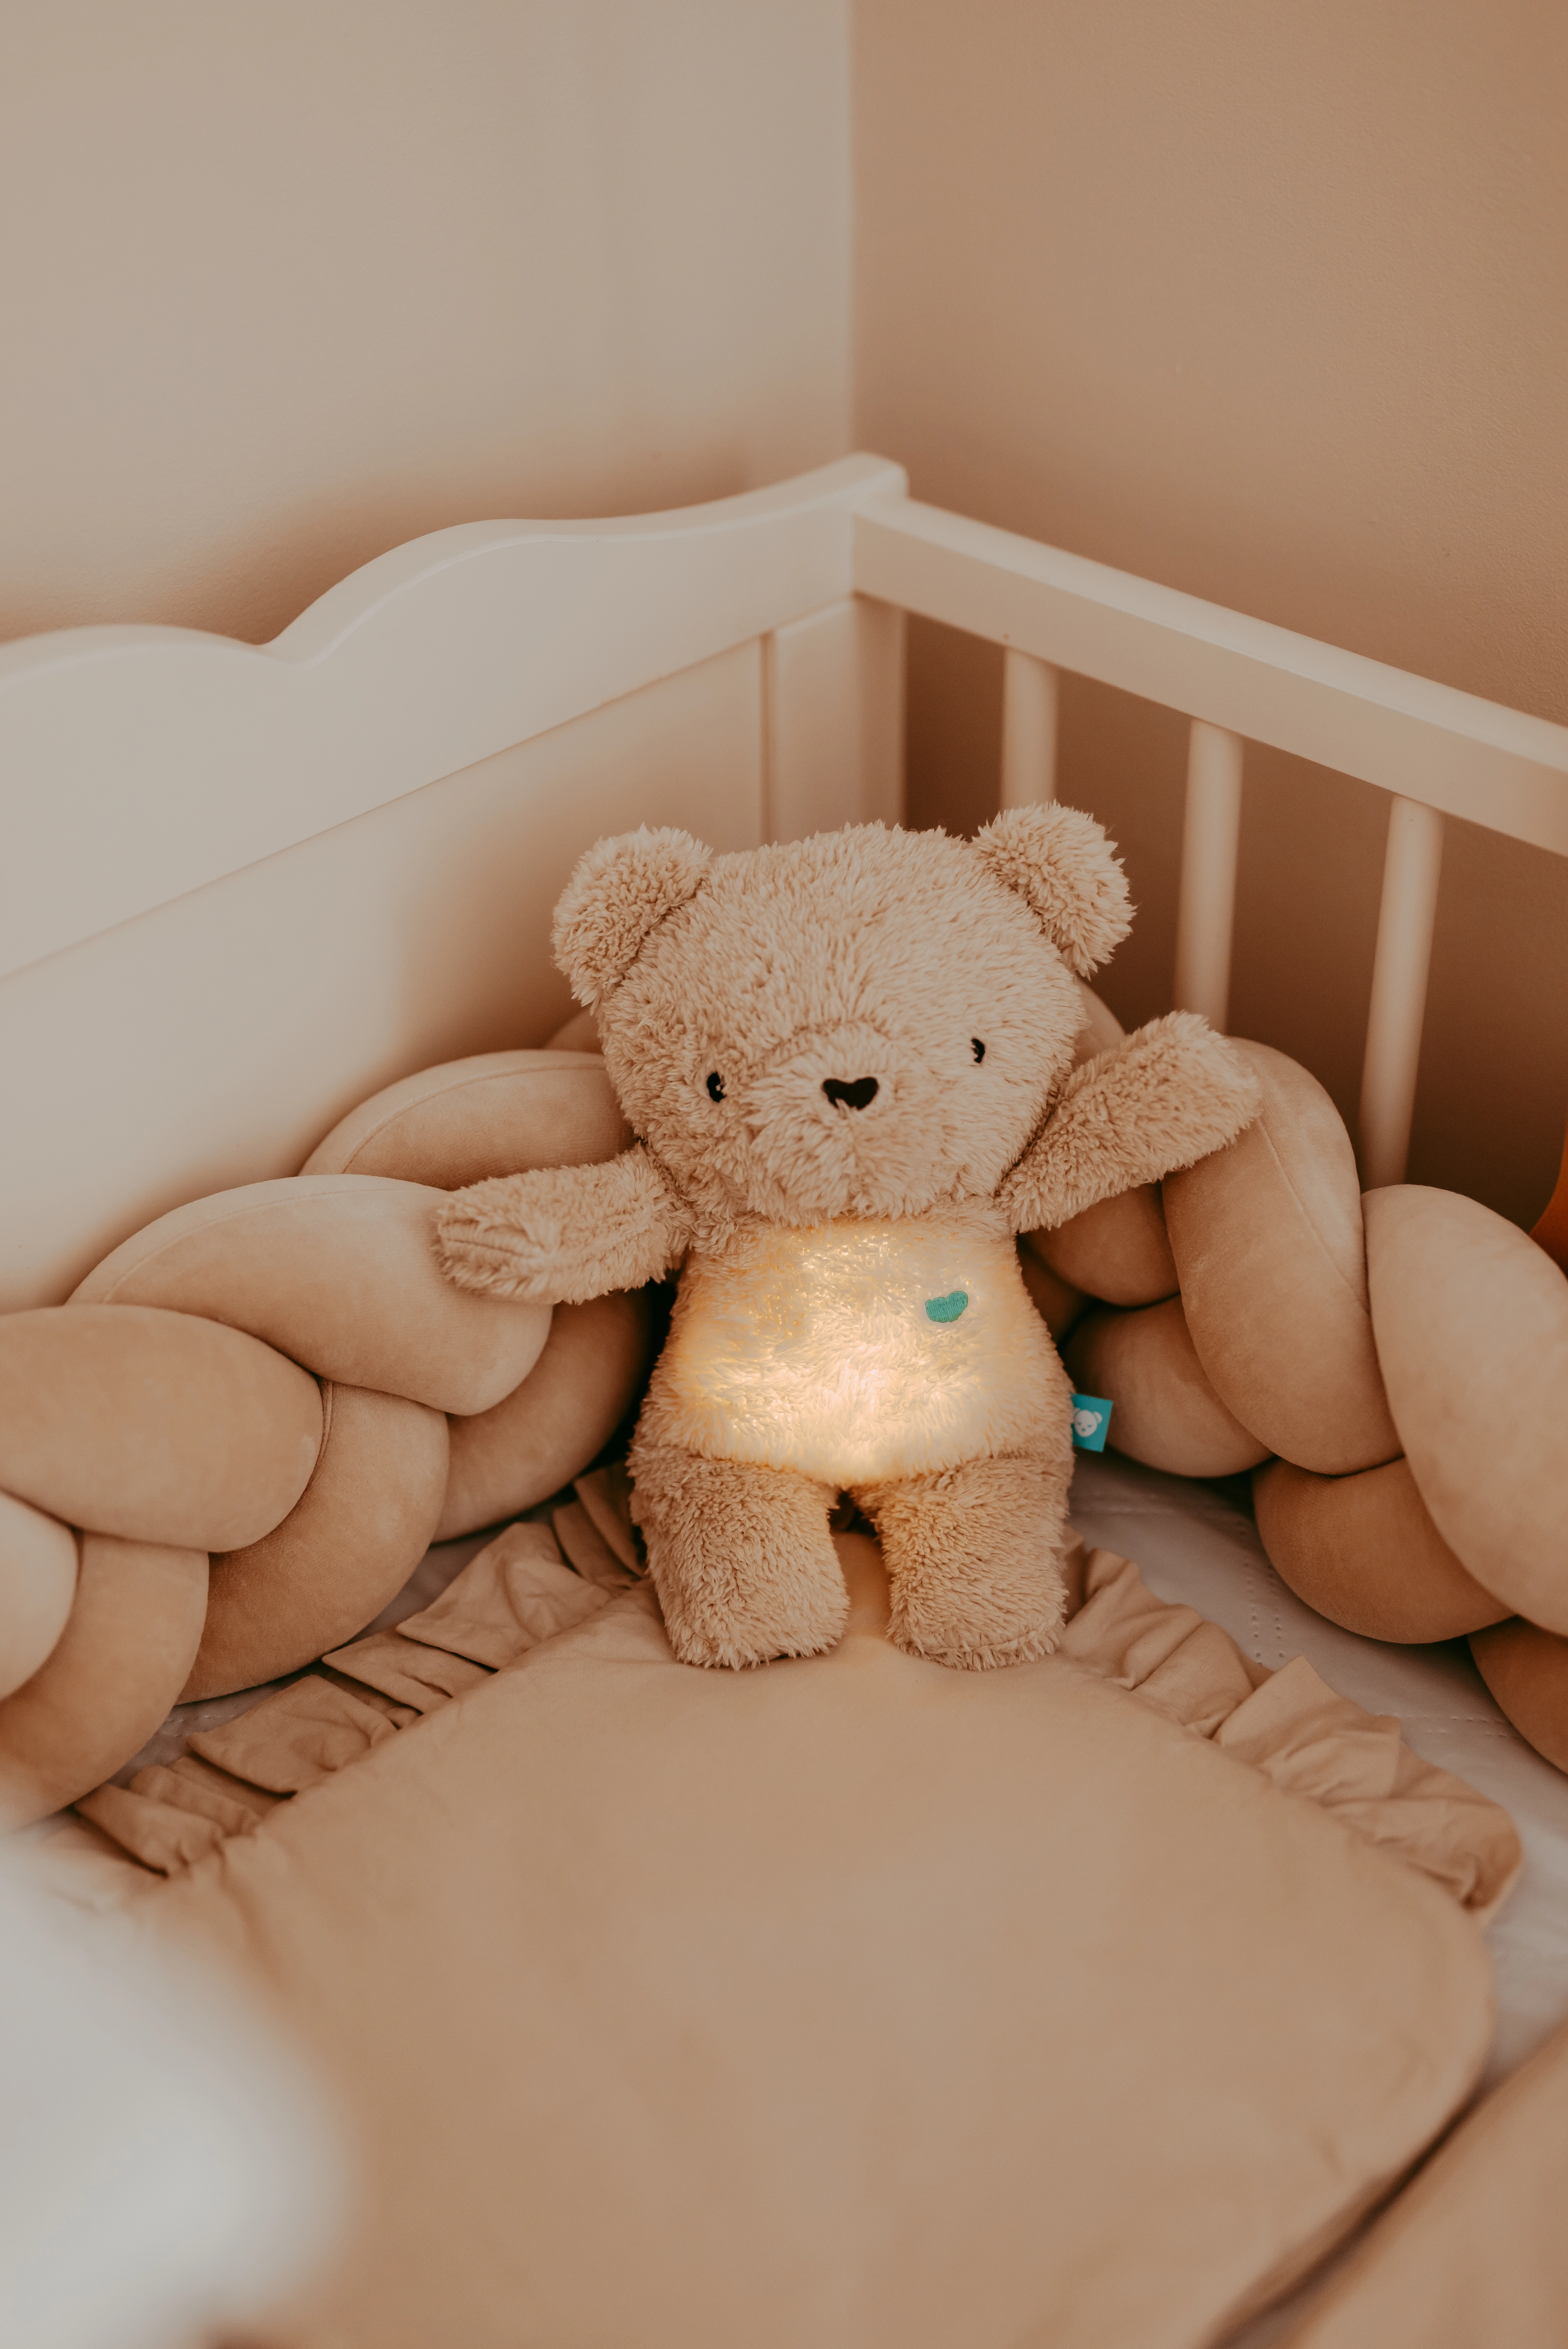 myHummy bears help children fall asleep. How does it work?